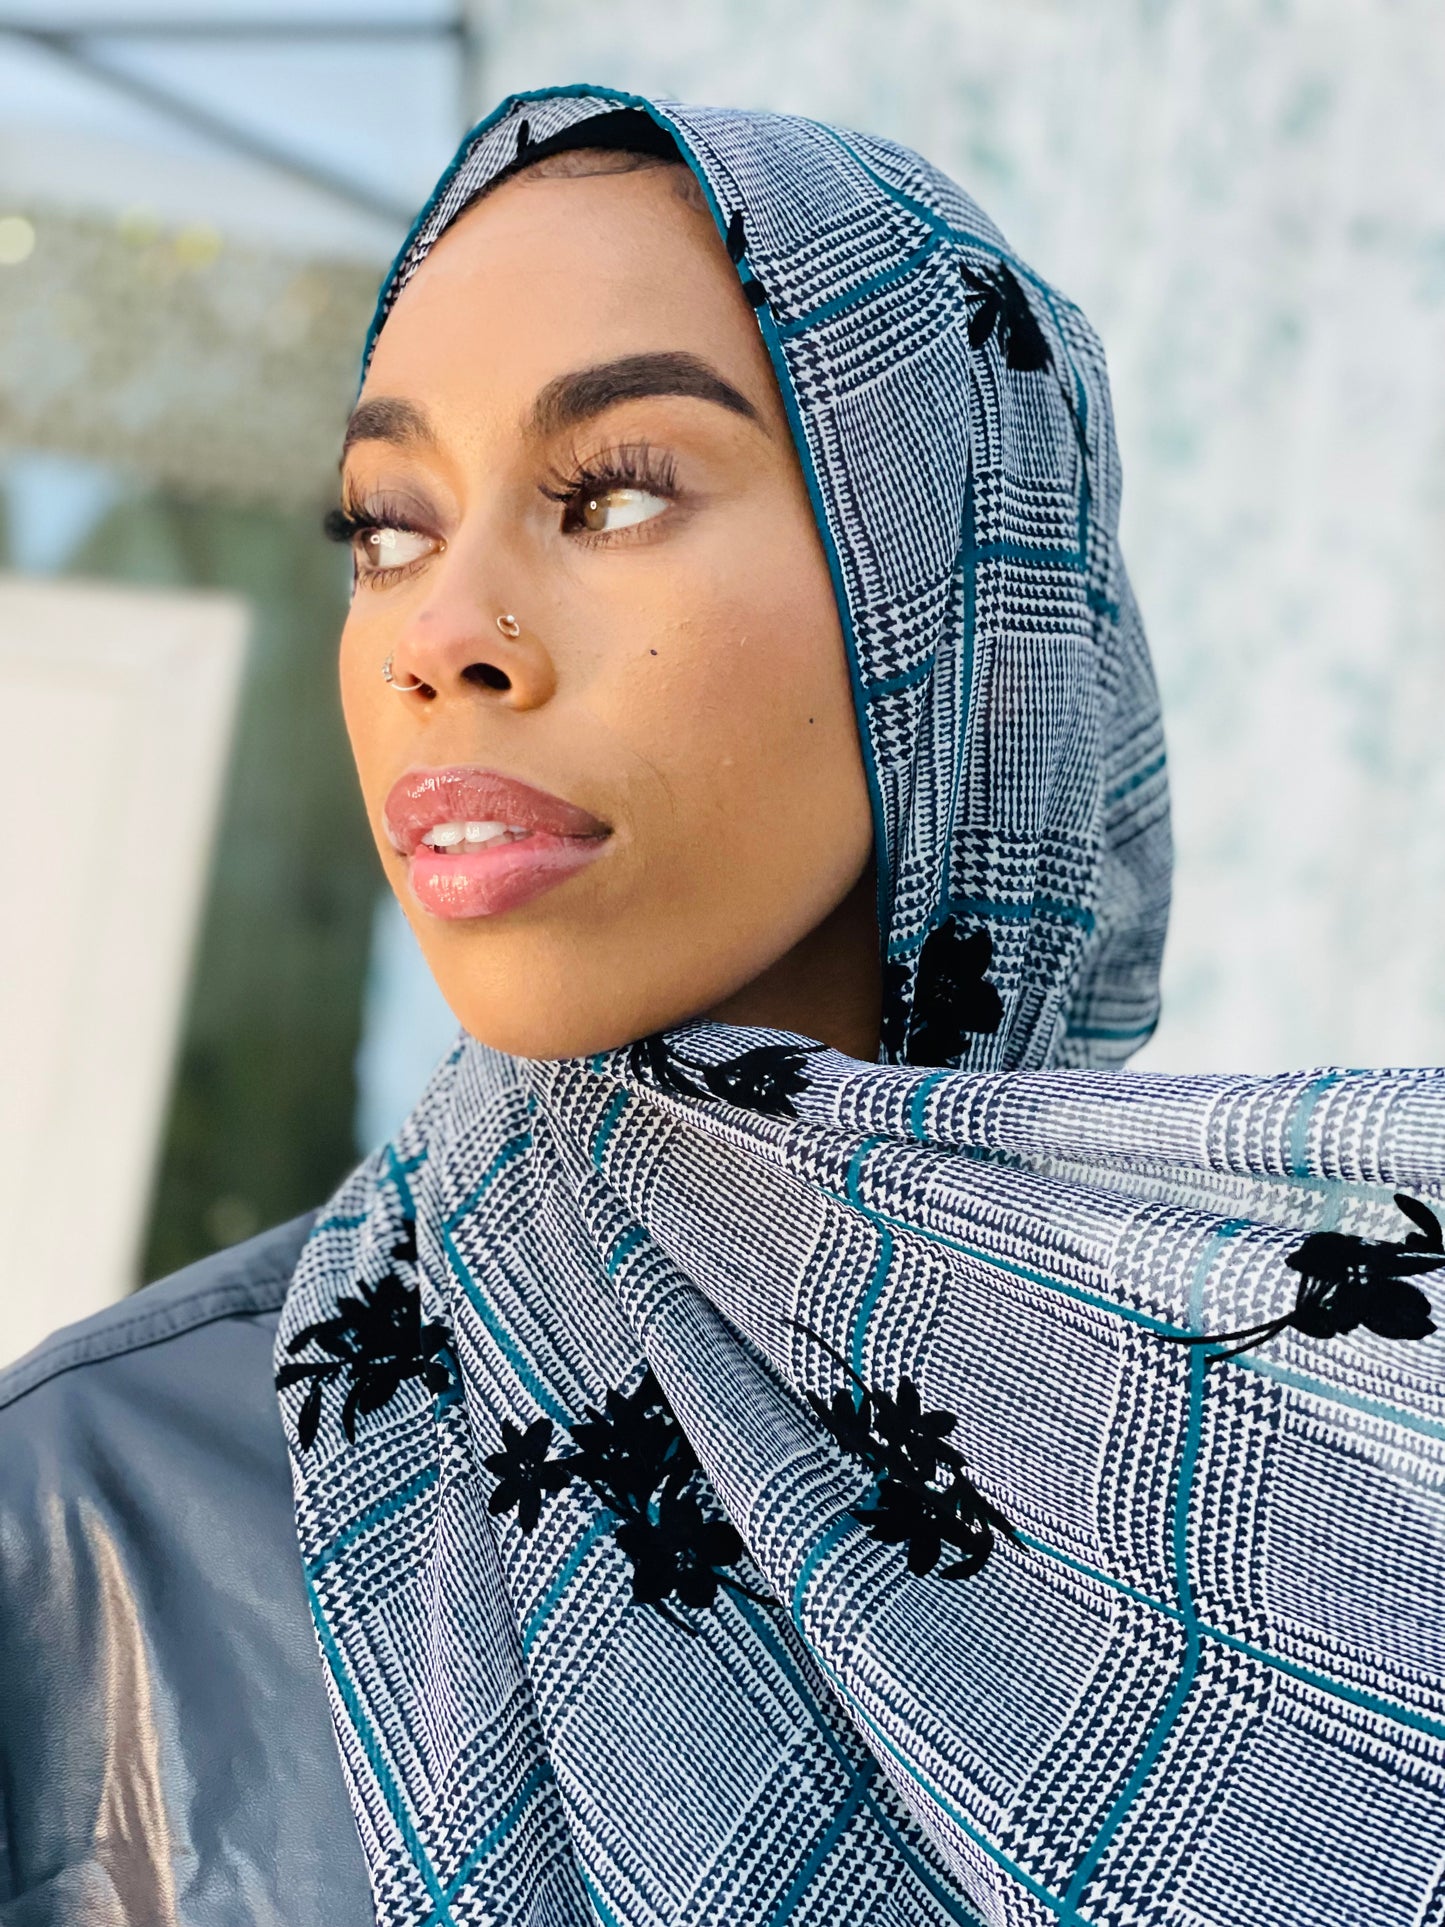 Limited Edition Crepe Chiffon Hijab: Boarding School